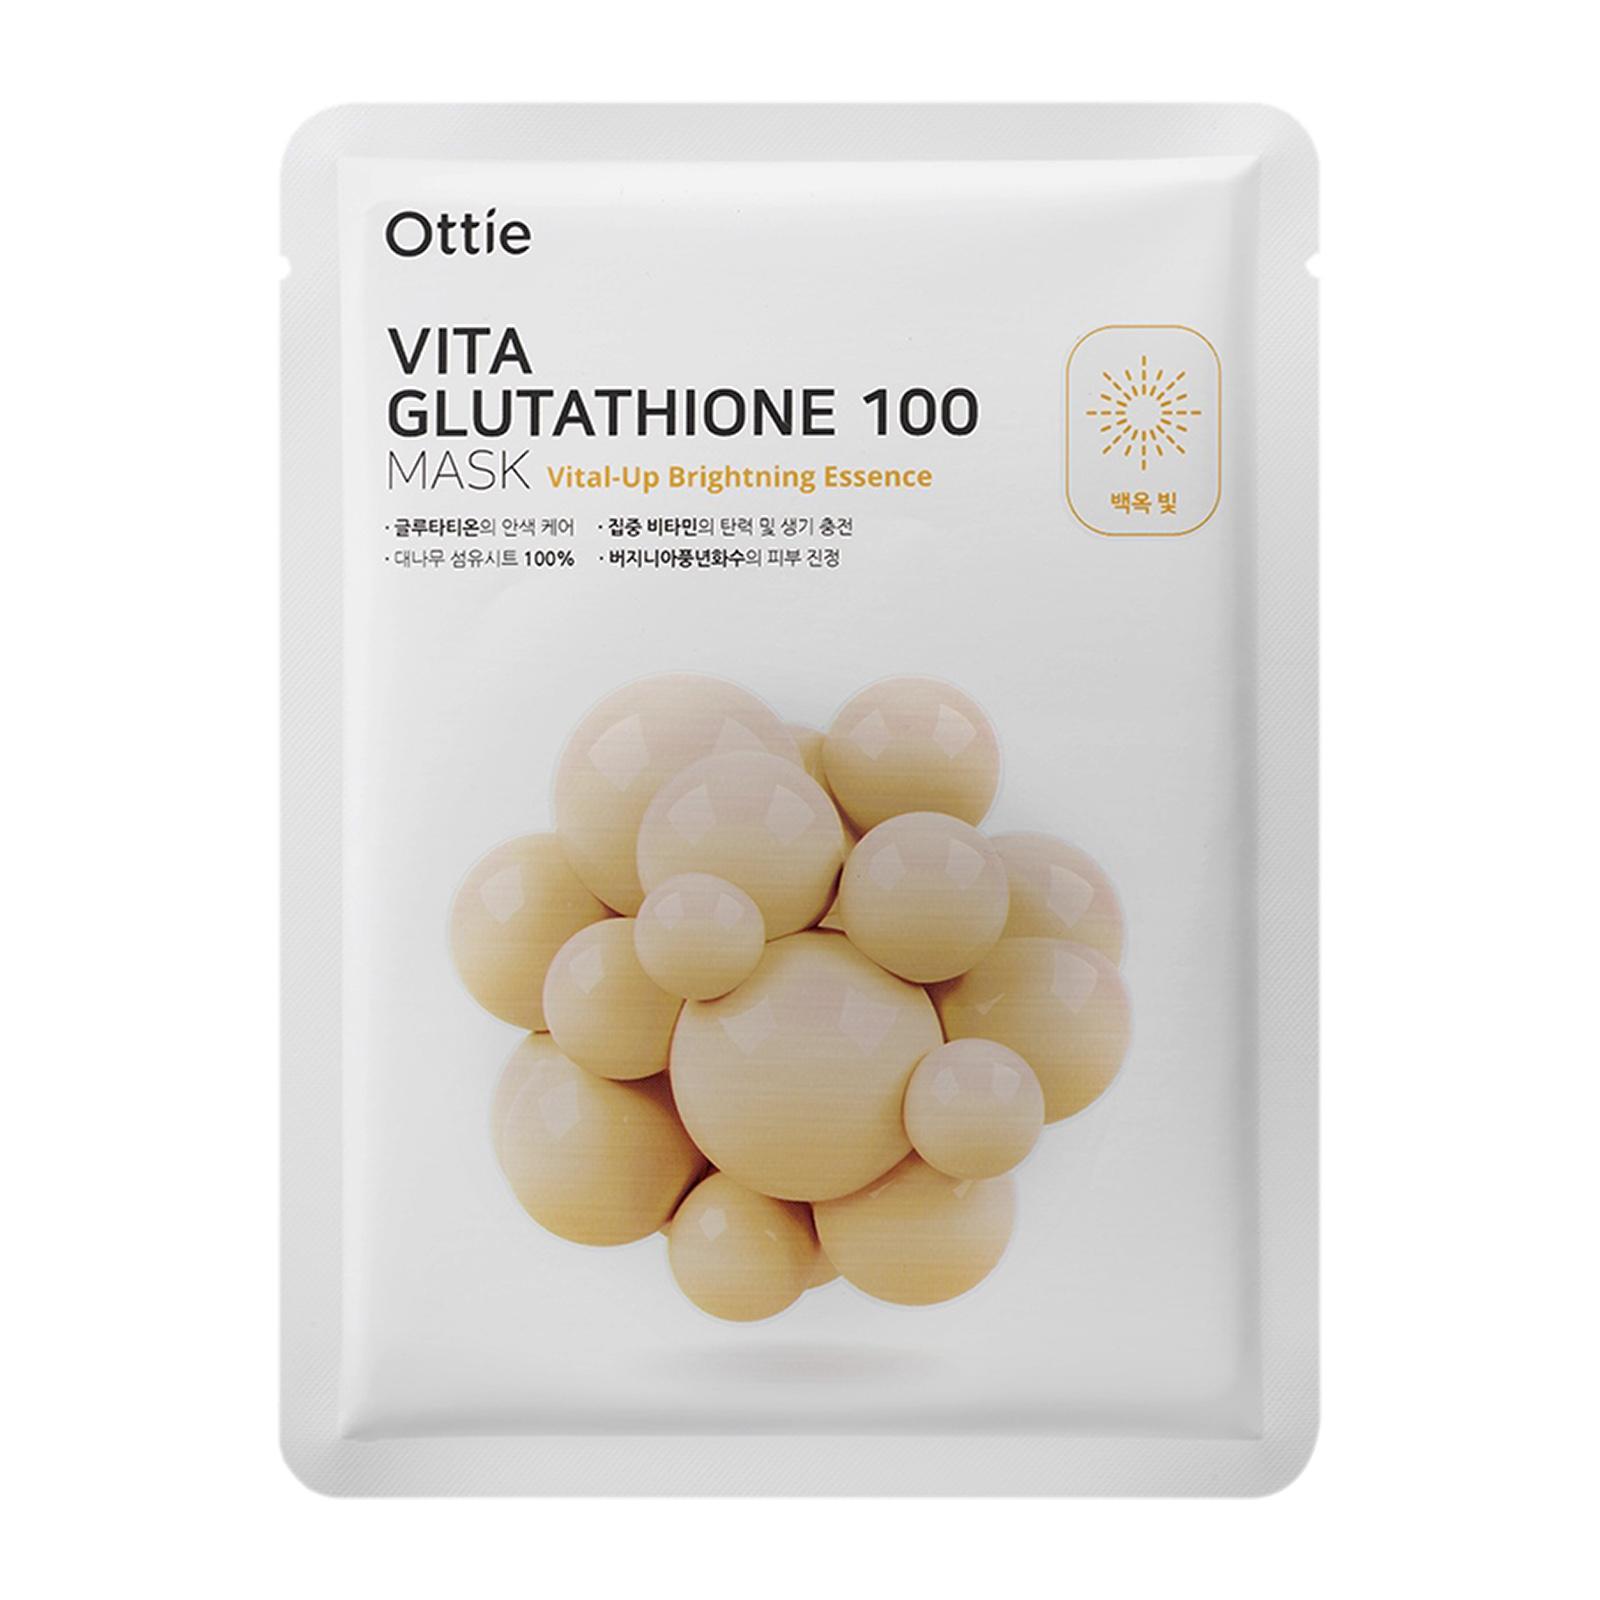  Тканевая маска Ottie, Vita Glutathione 100 Mask, 23ml